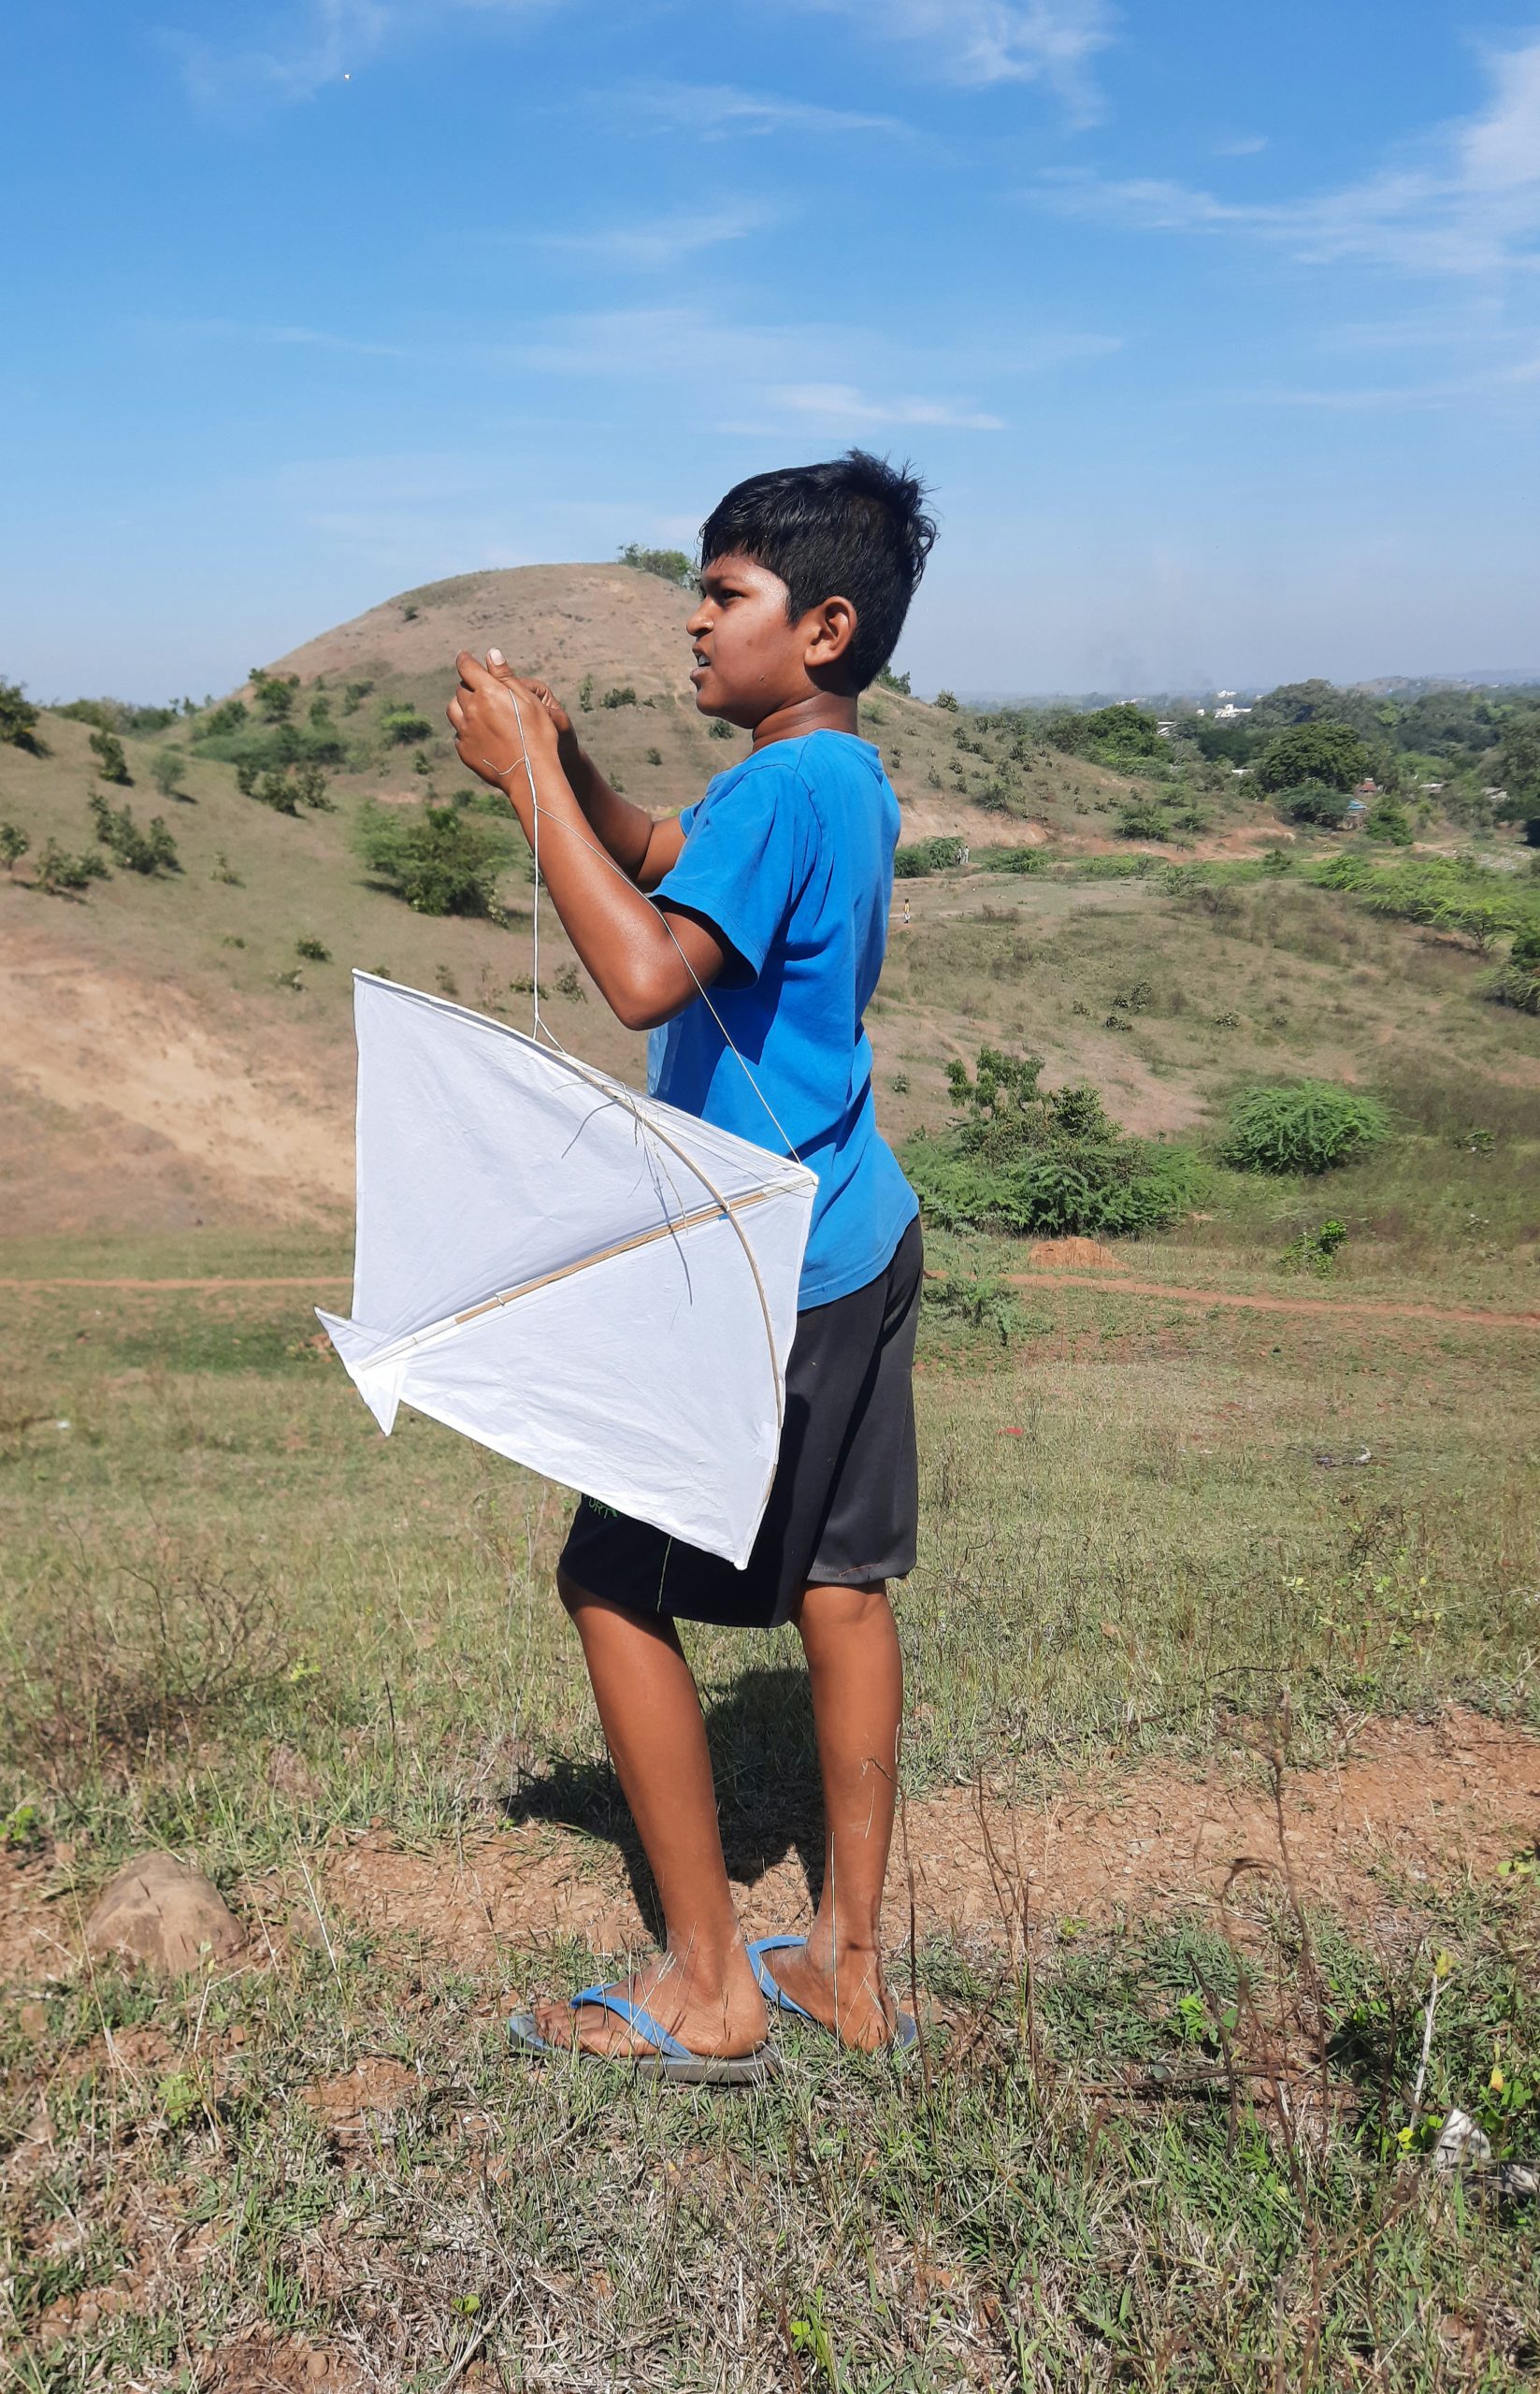 Kid holding kite in the farm